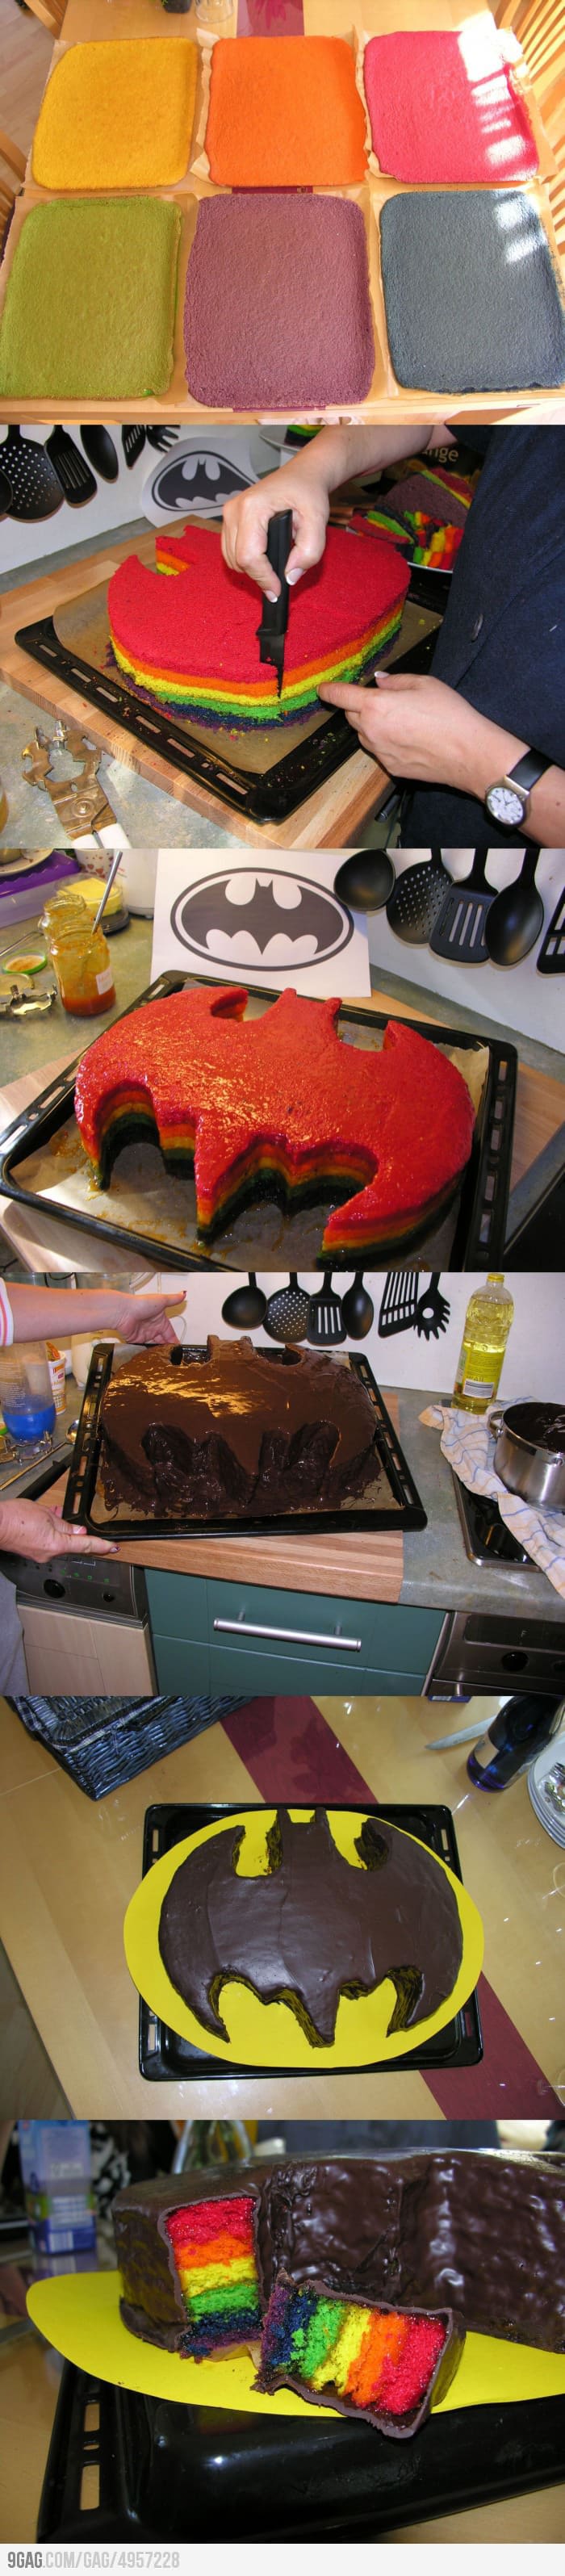 Best Rainbow-Colored Batman Cake Ever Baked